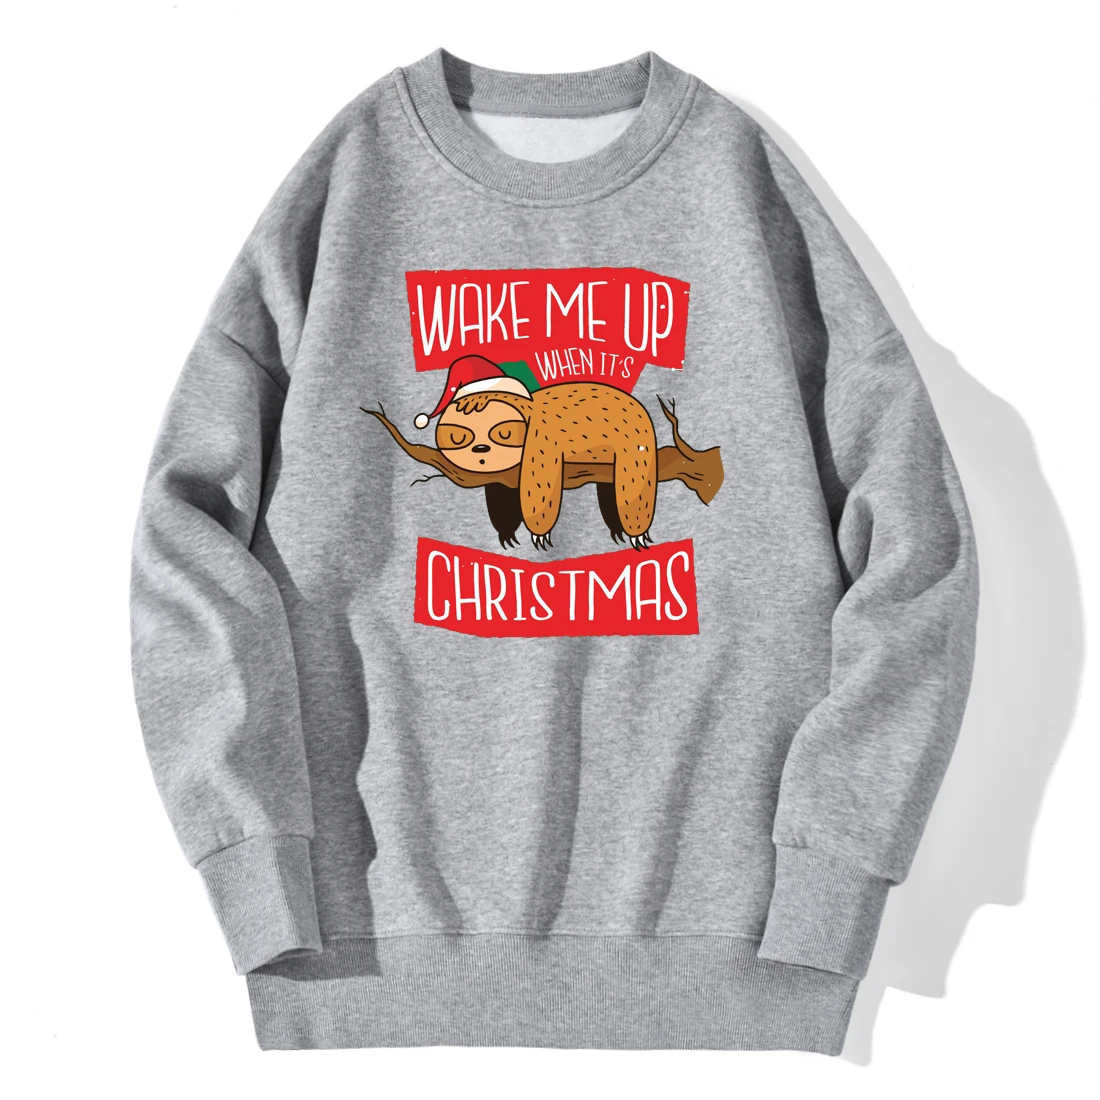 

Wake Me Up Christmas Mens Sweatshirt Polyester Hip Hop Hoody Fashion Tops Leisure Clothing Winter 2020 New Moletom Masculino